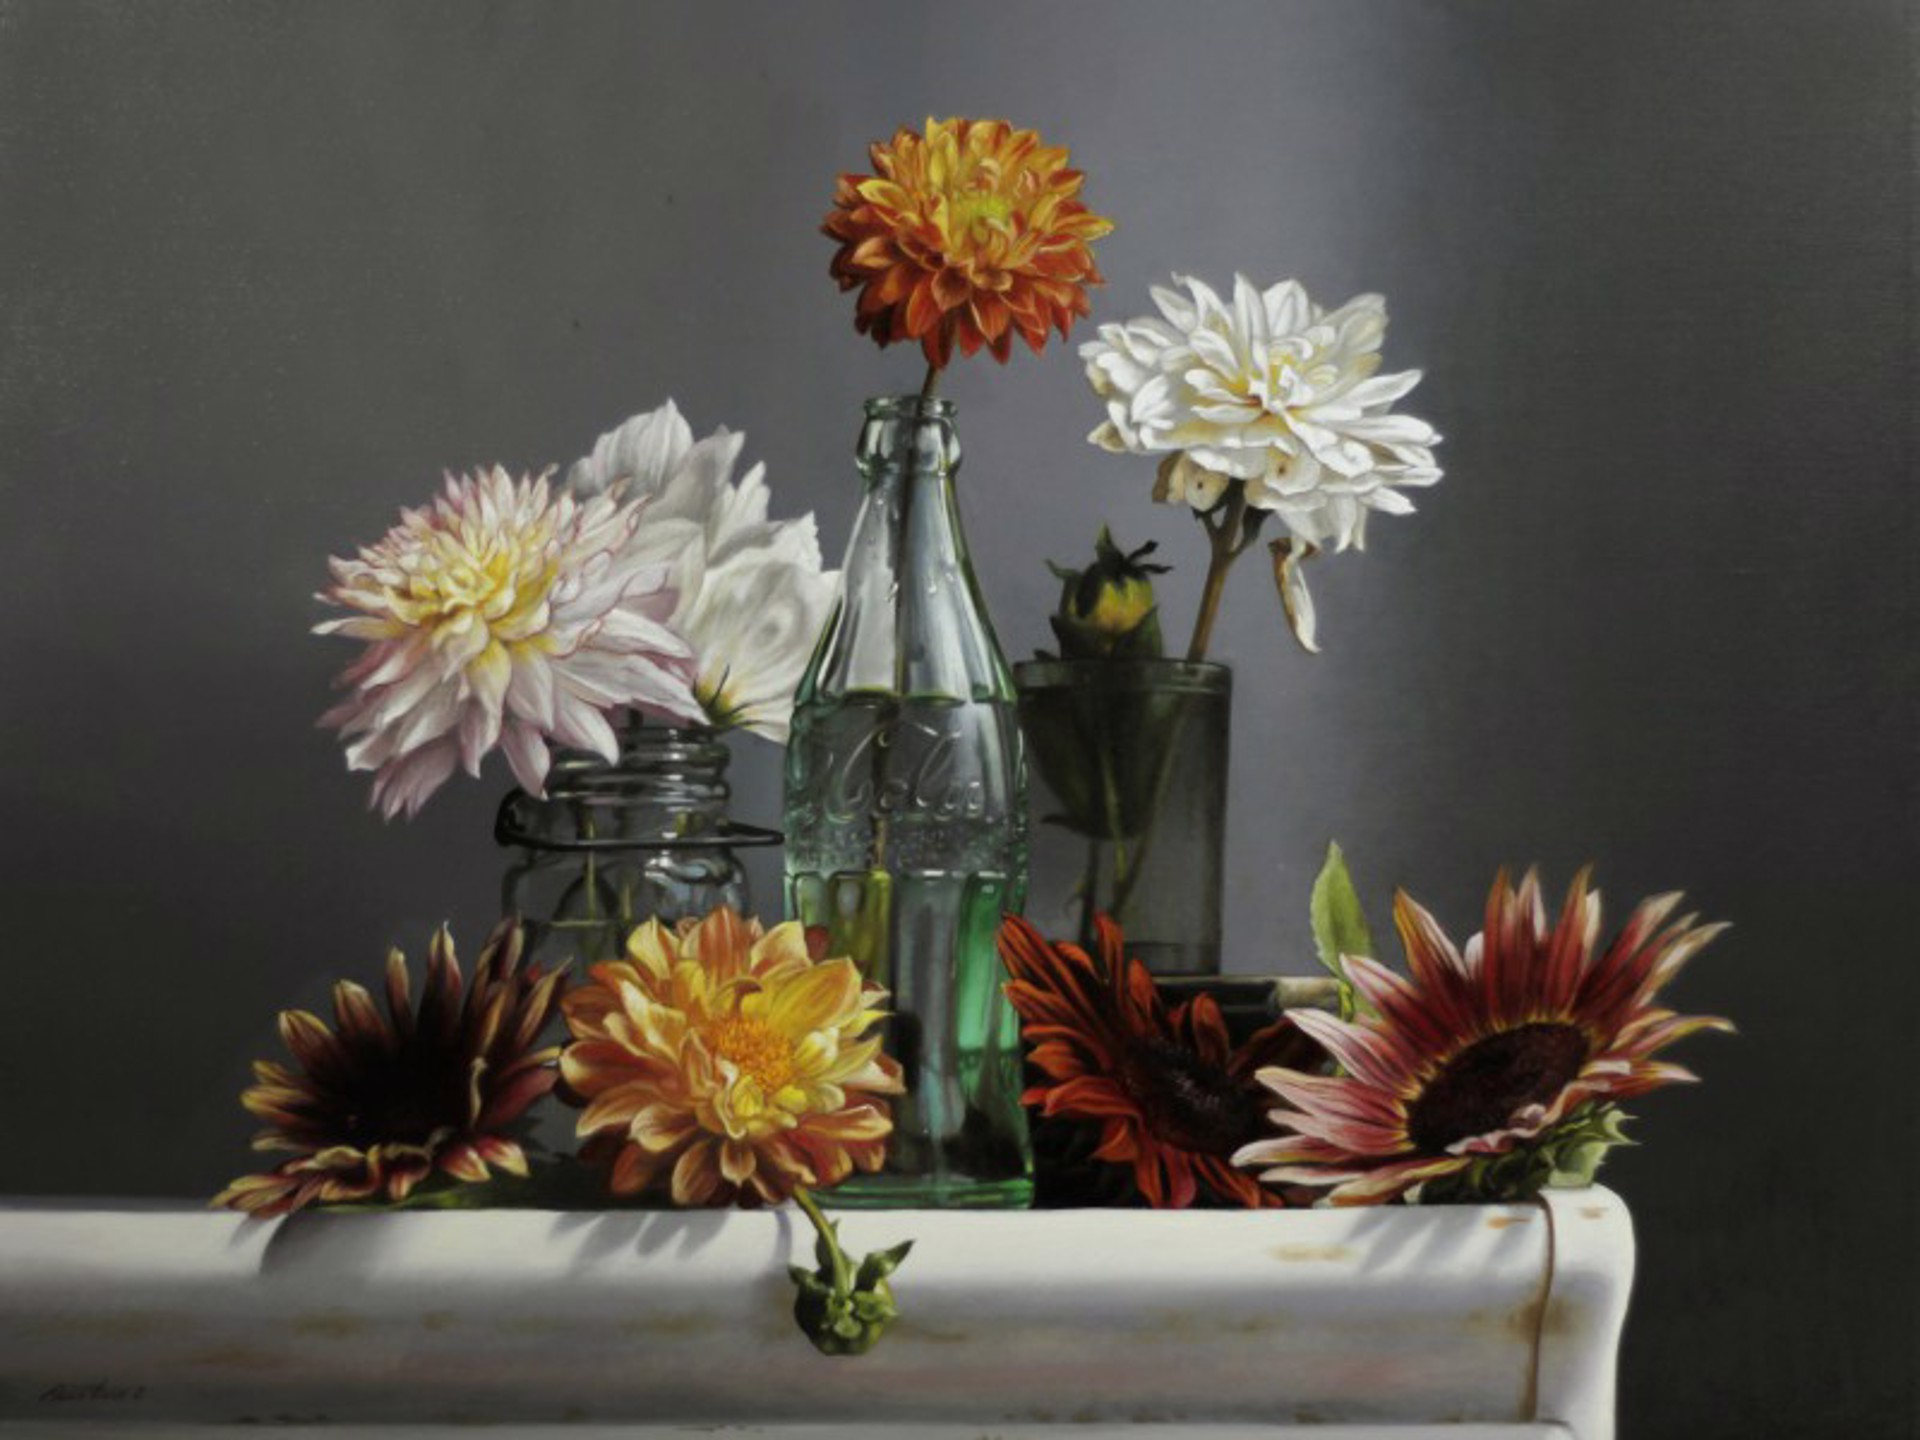 Sunflowers and Dahlias by Larry Preston